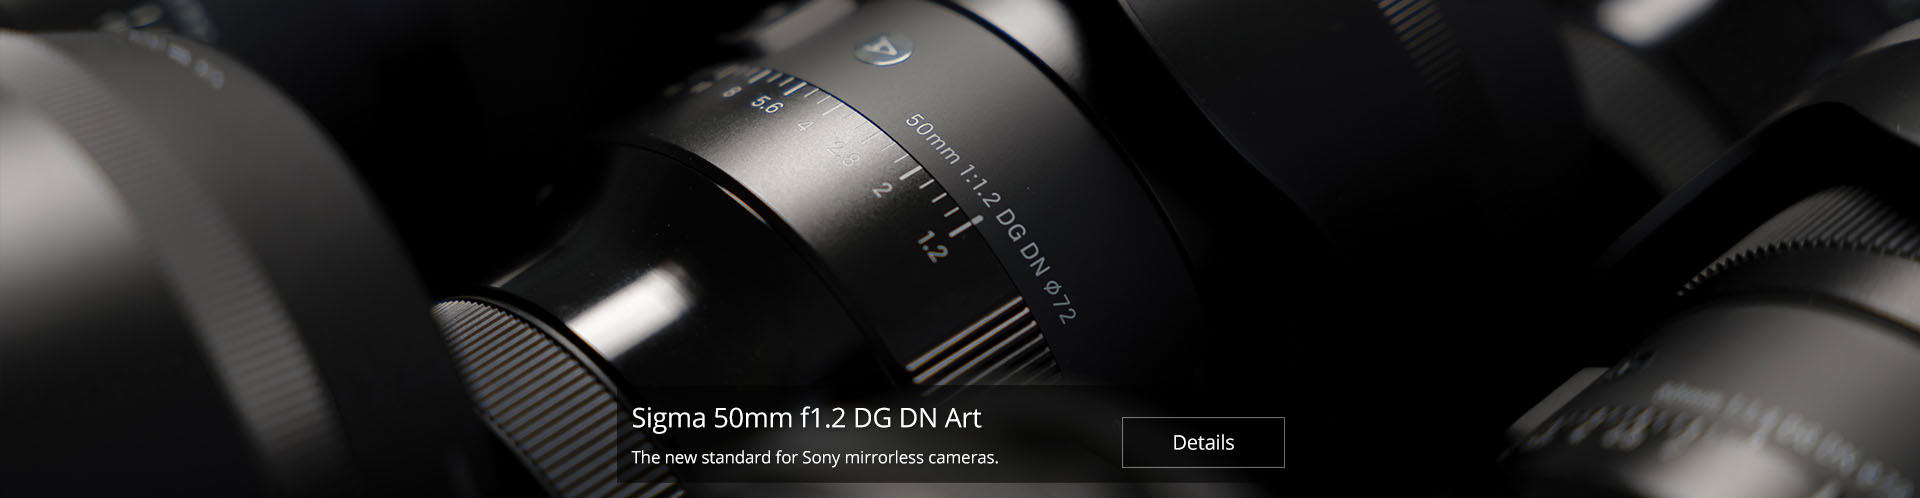 Sigma 50mm f1.2 DG DN Art Sony E mount